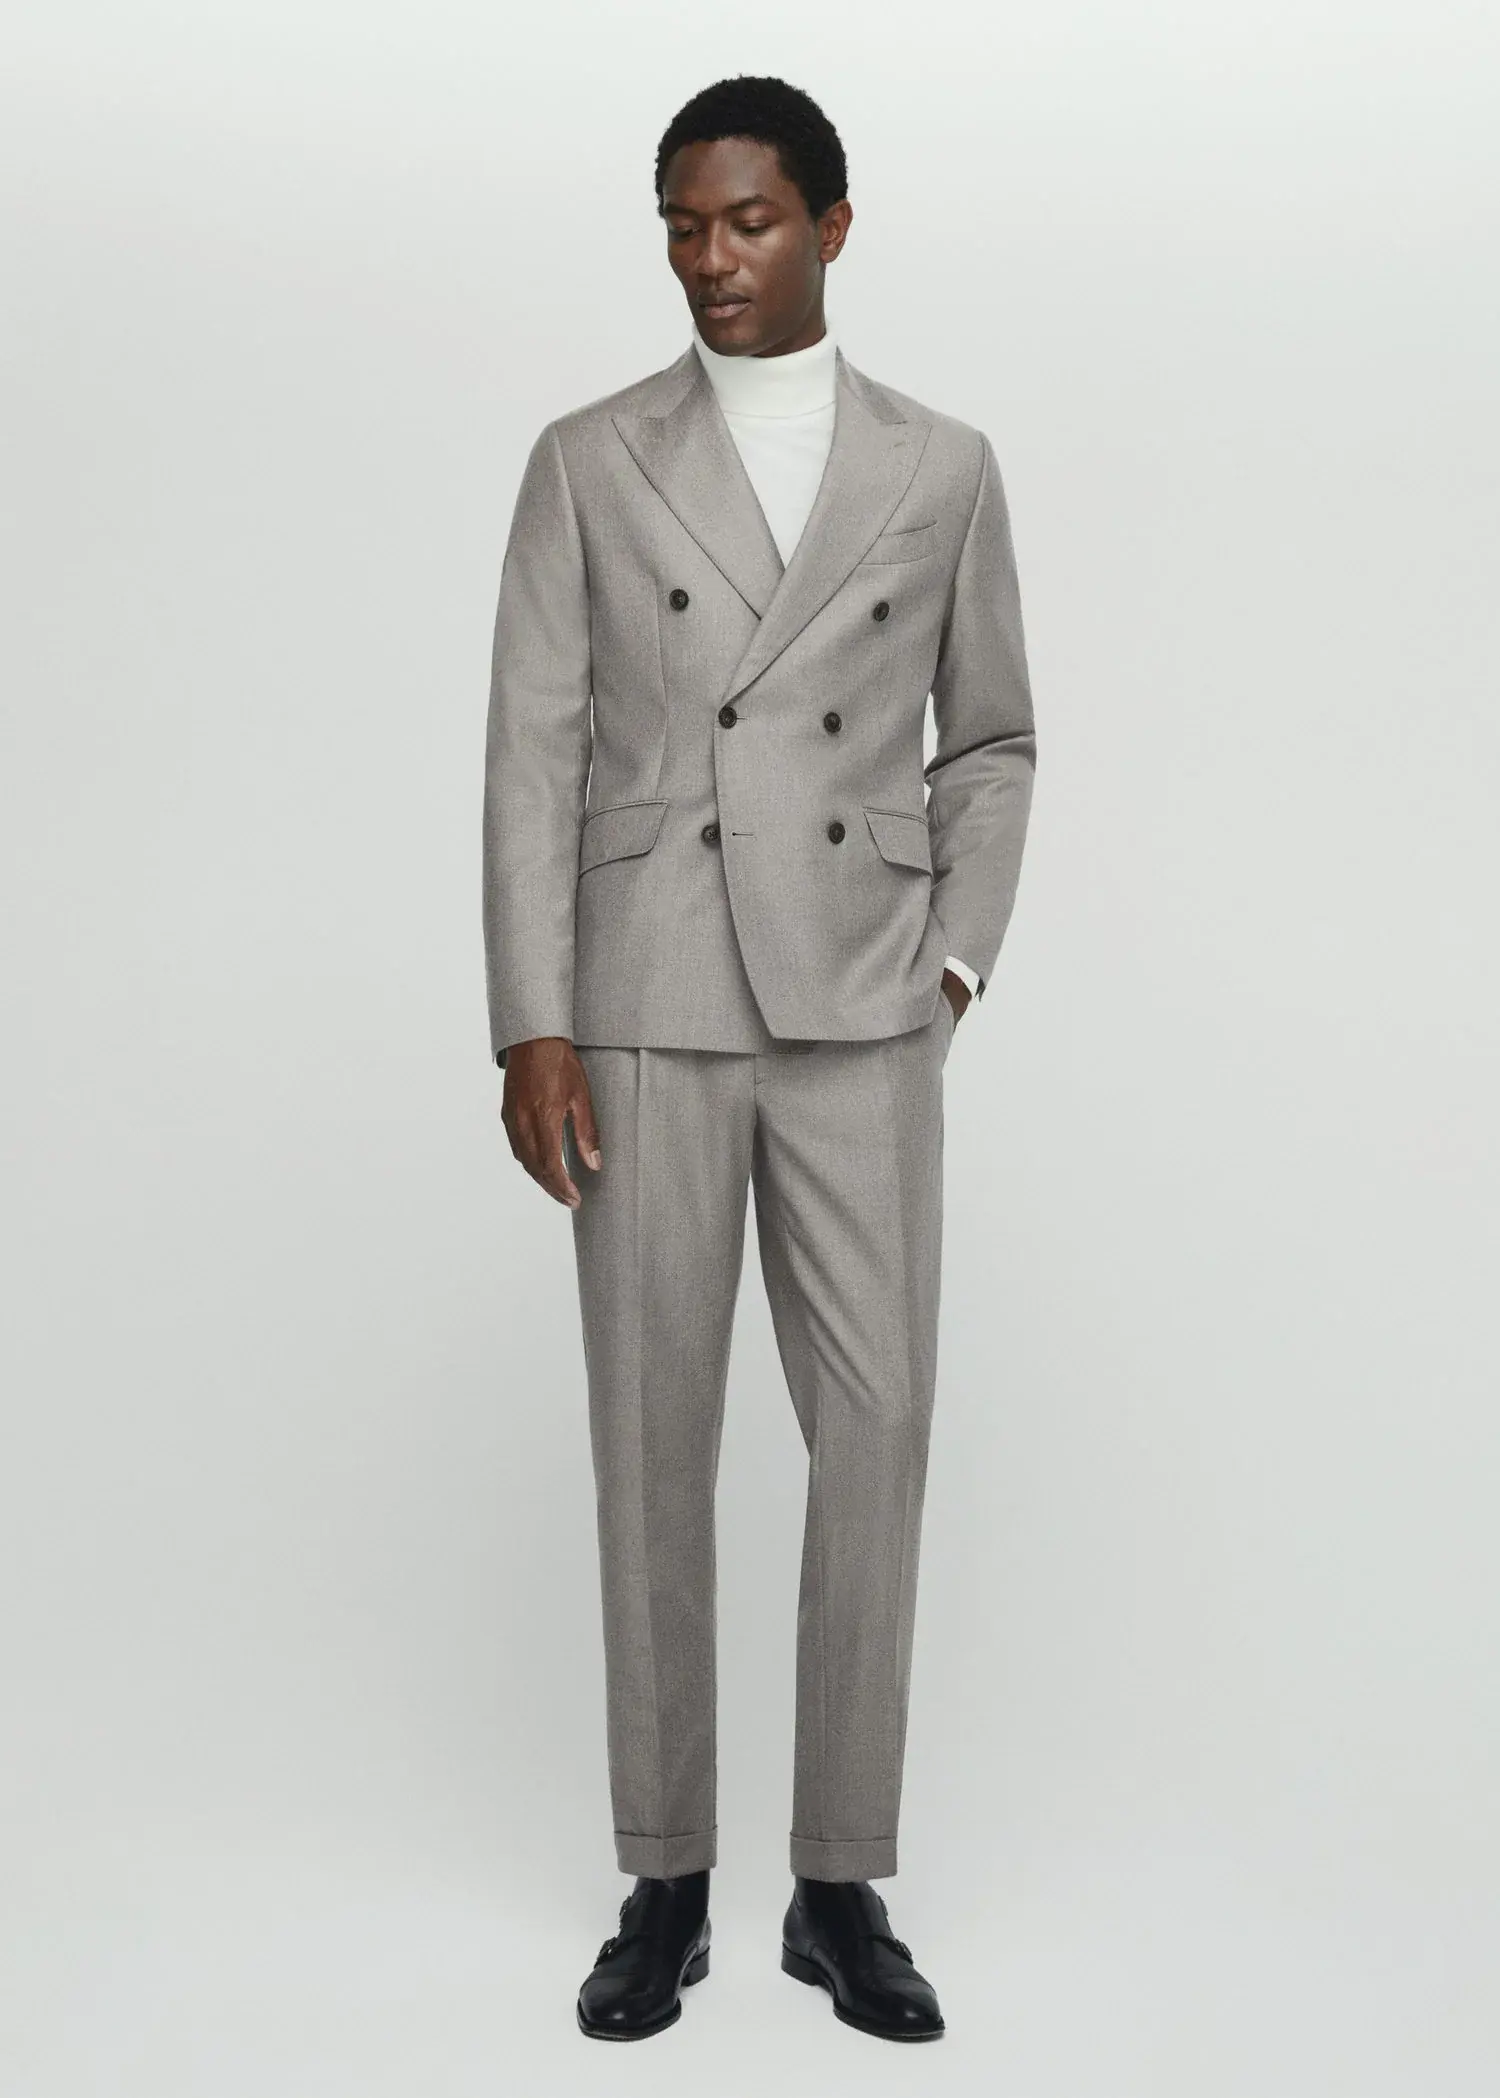 Mango Virgin wool double-breasted suit jacket. 3